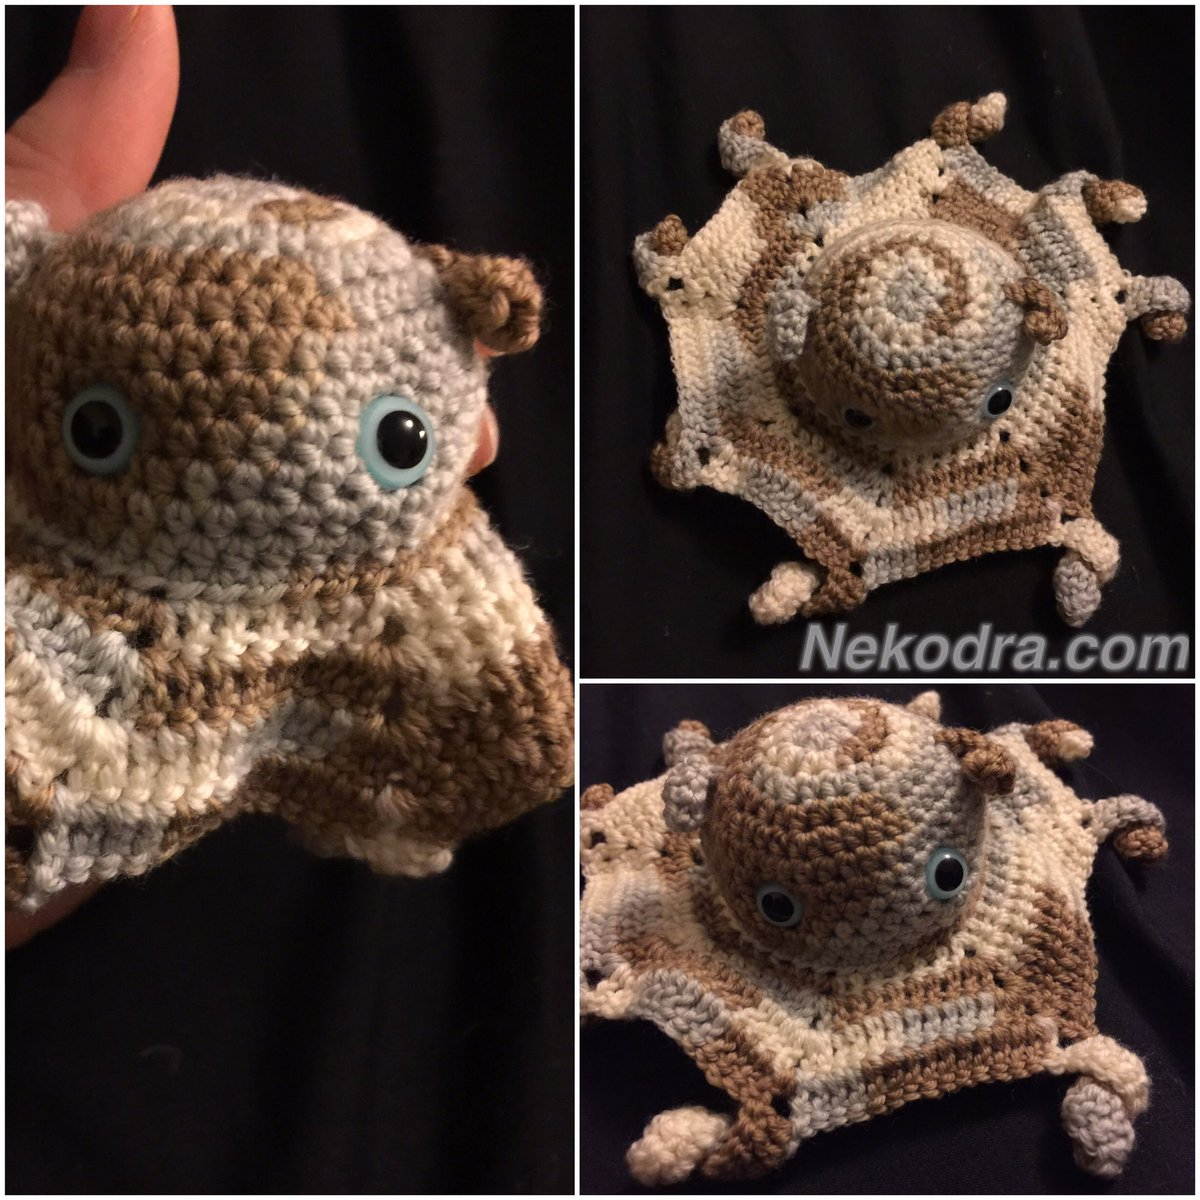 Crochet Dumbo Pattern Nekodra On Twitter This Is An Adorable Little Dumbo Octopus I